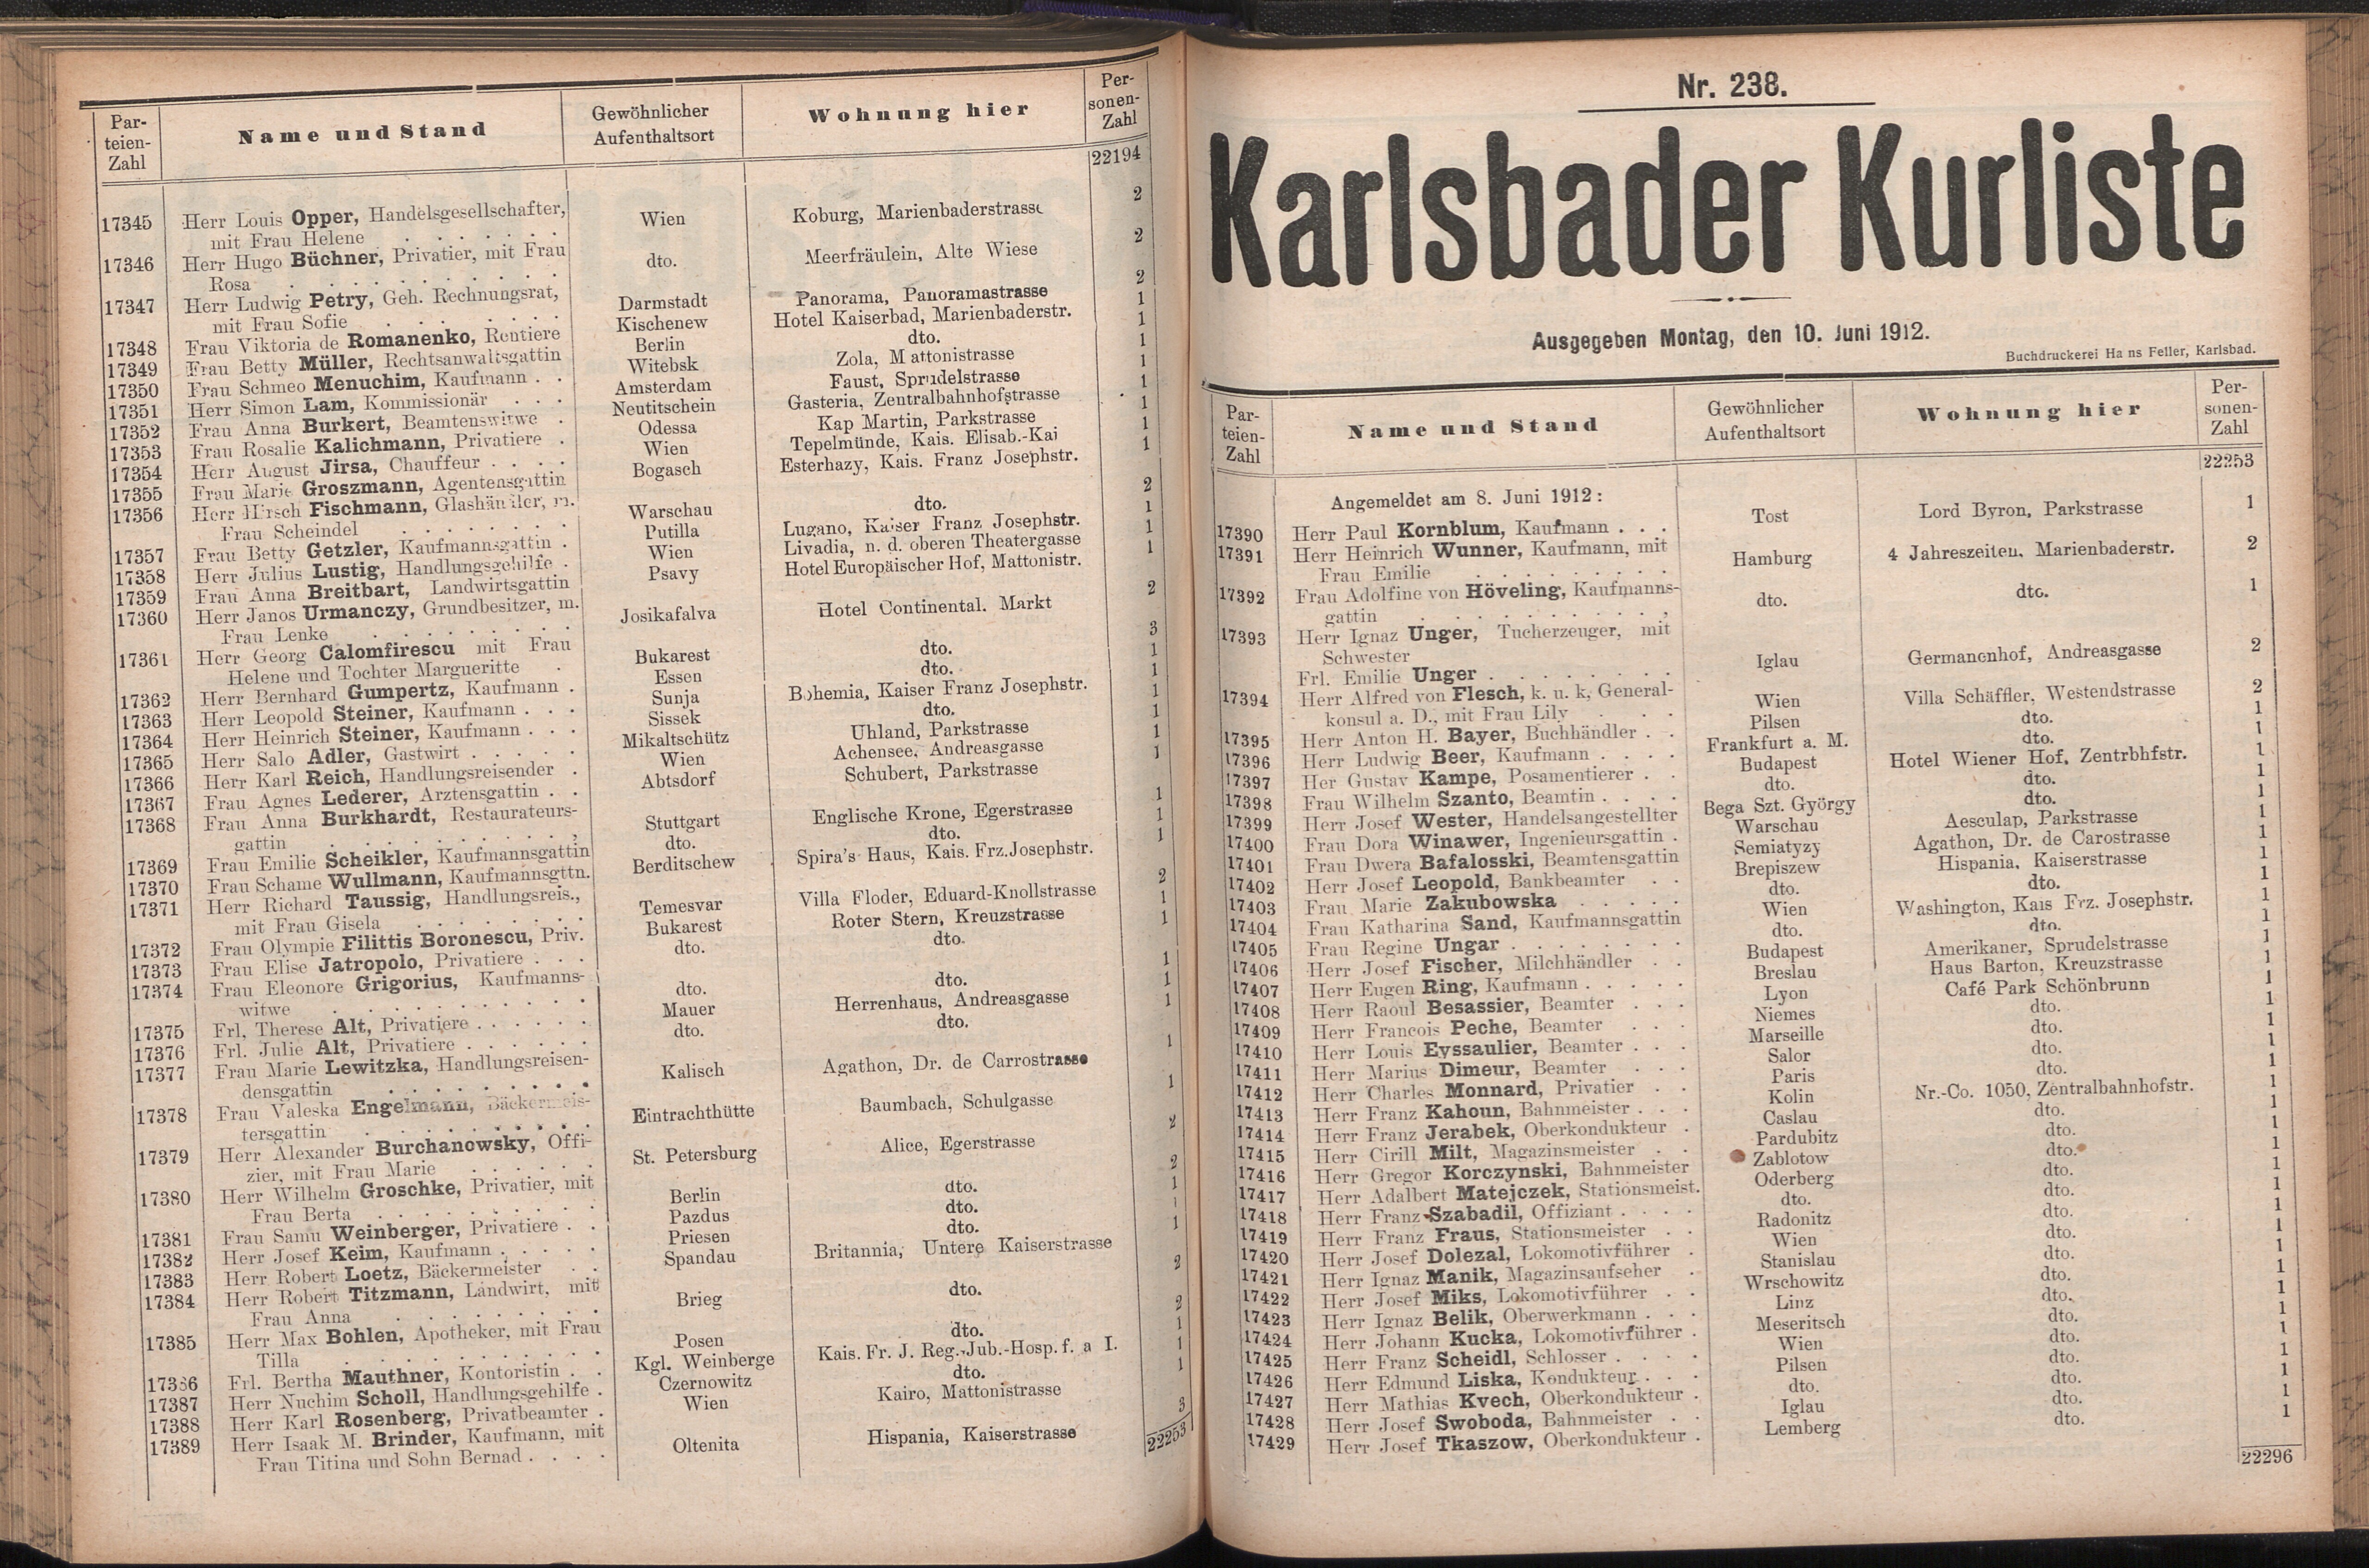 295. soap-kv_knihovna_karlsbader-kurliste-1912-1_2950